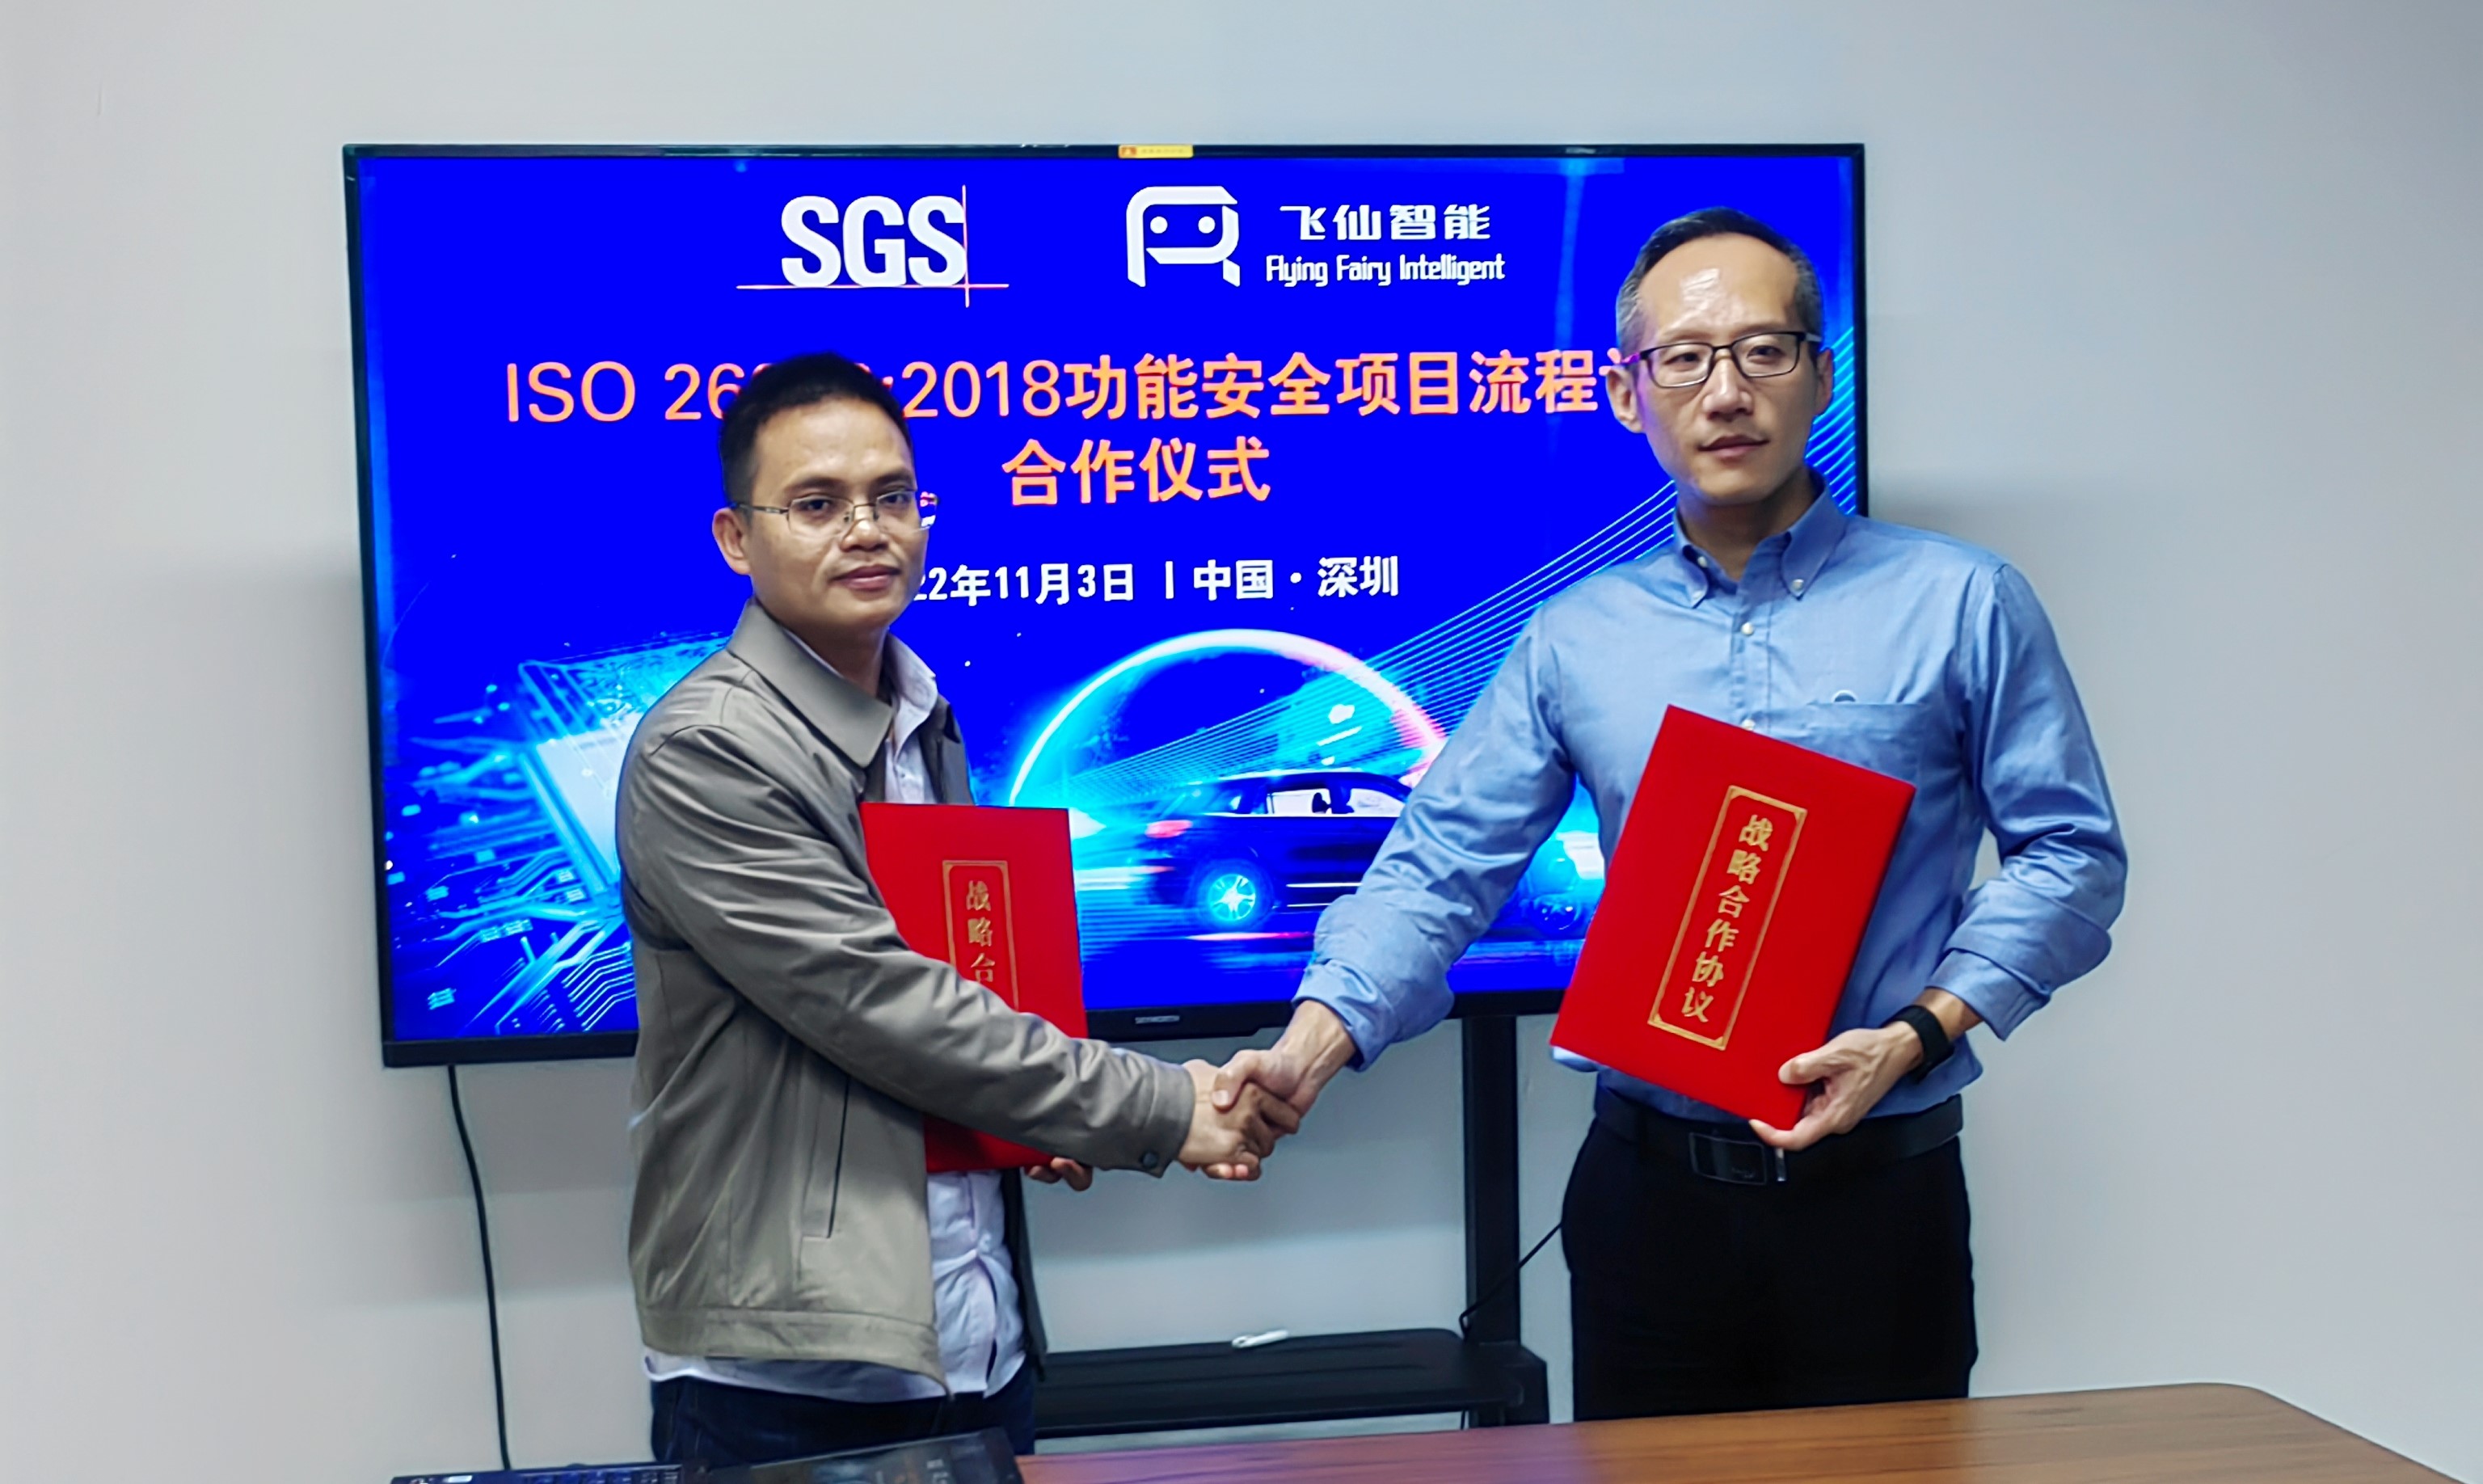 SGS携手威斯尼斯人8188cc达成ISO 26262:2018汽车功能安全认证合作